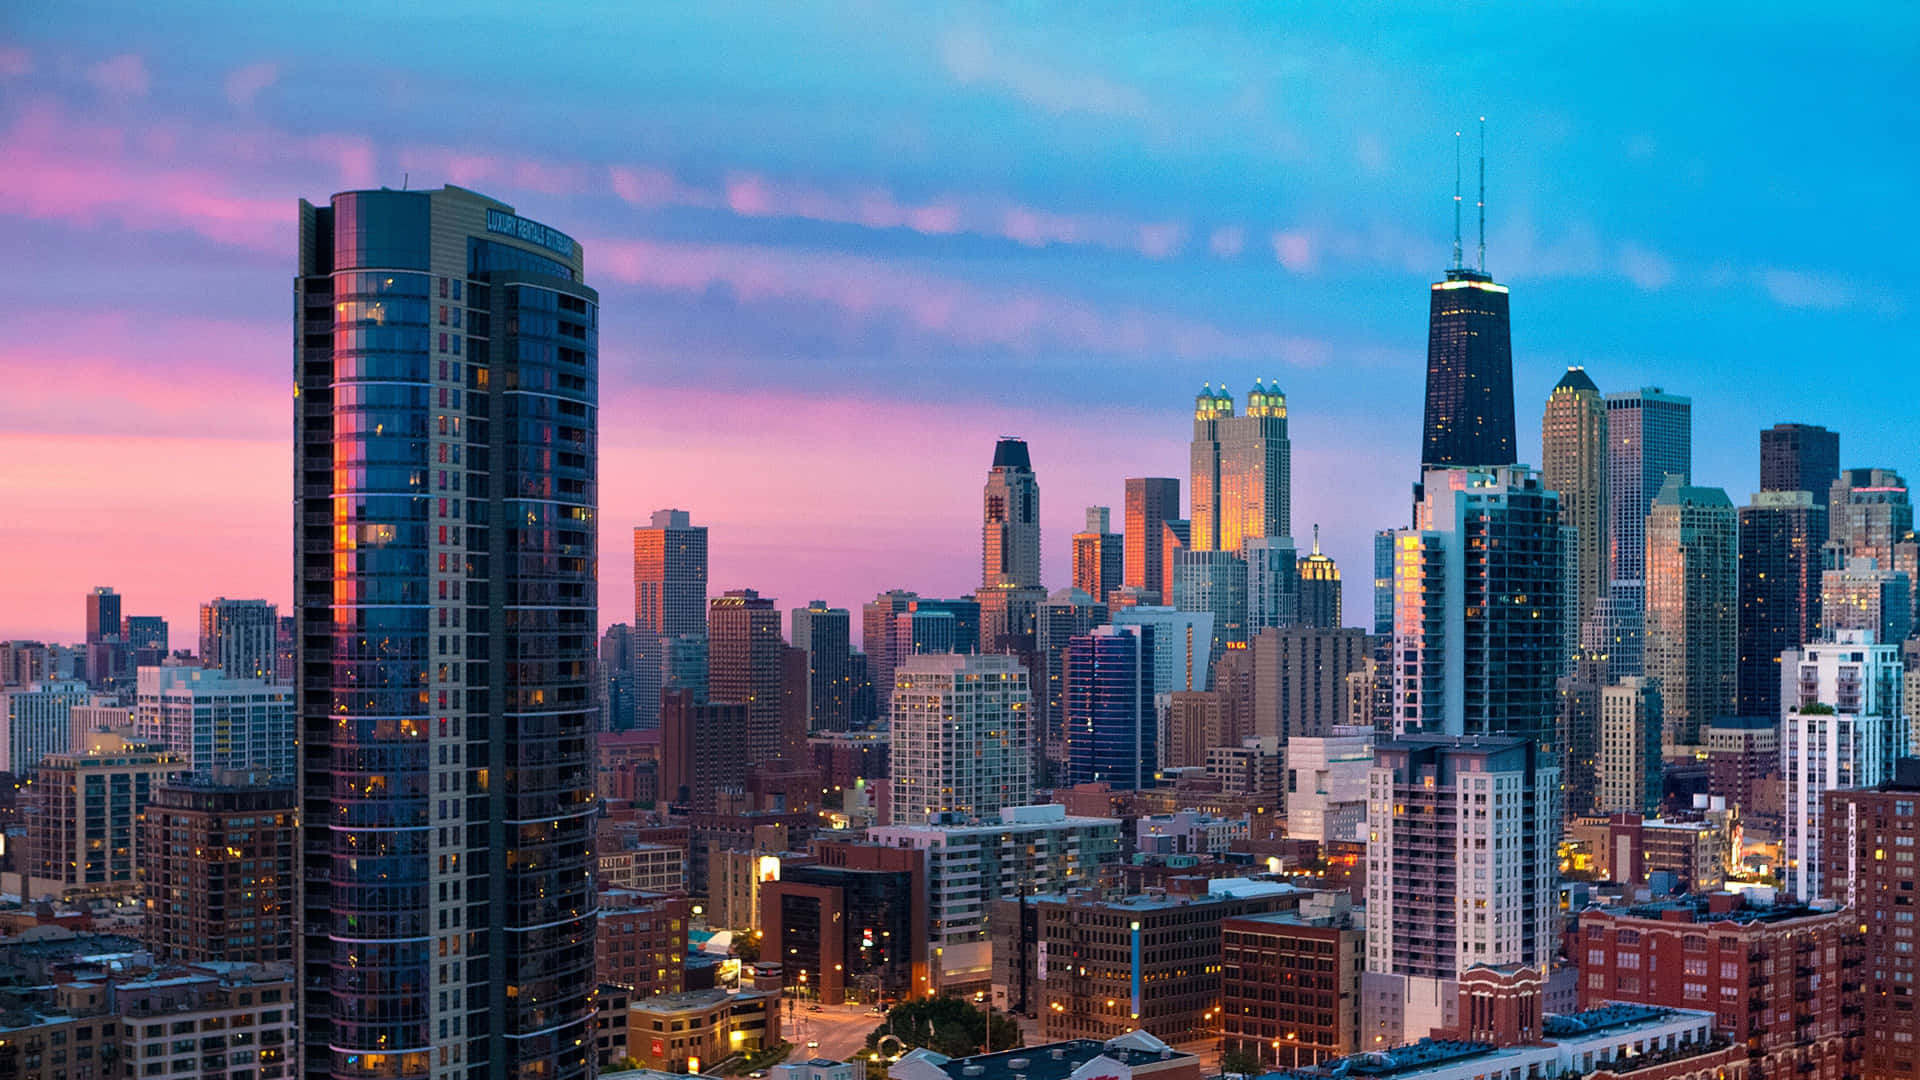 "Skyline of Beautiful Chicago, Illinois at Night"